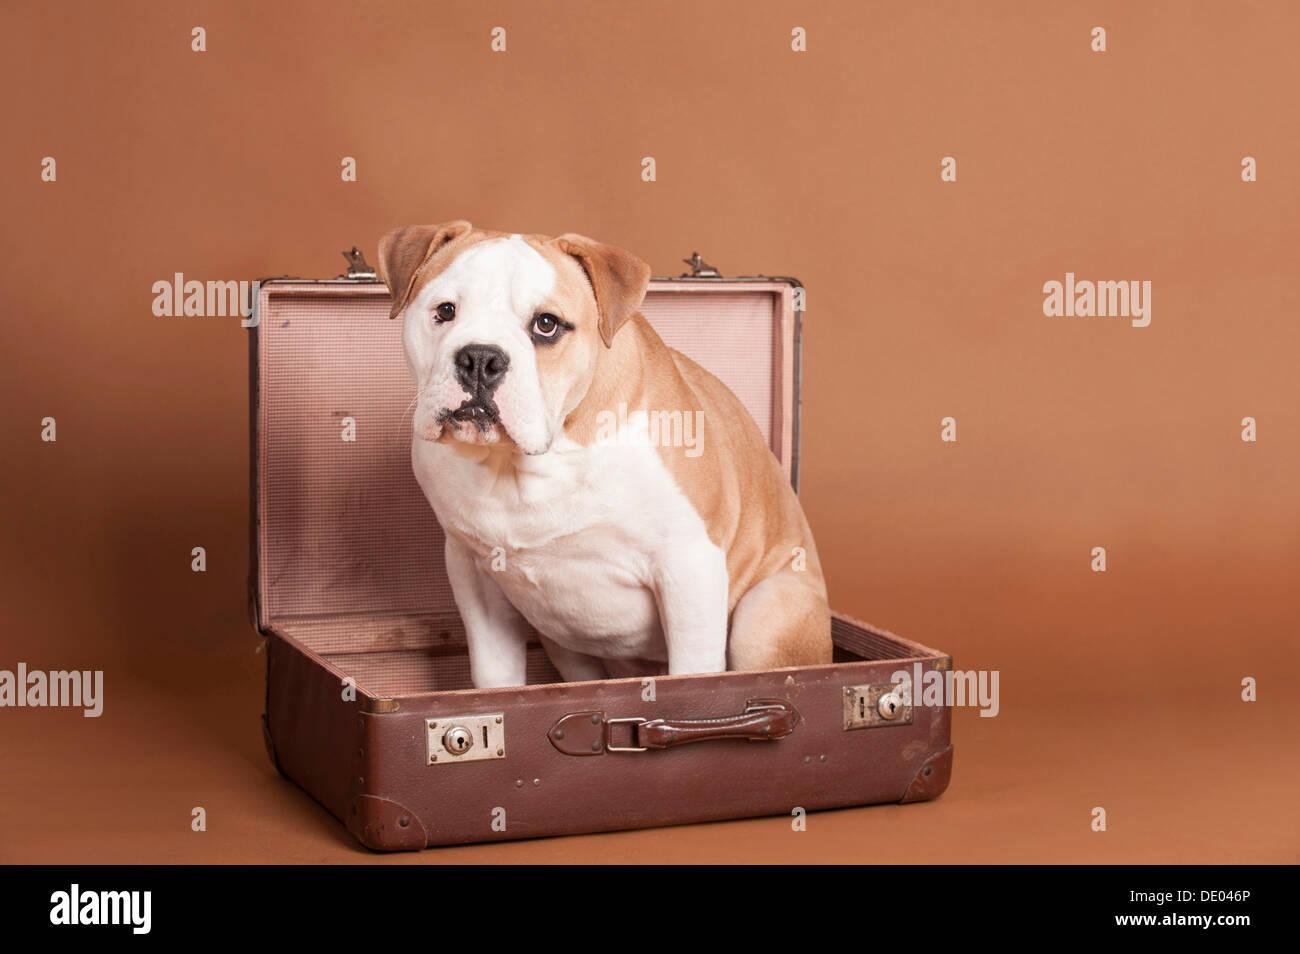 English Bulldog sitting in a suitcase Stock Photo